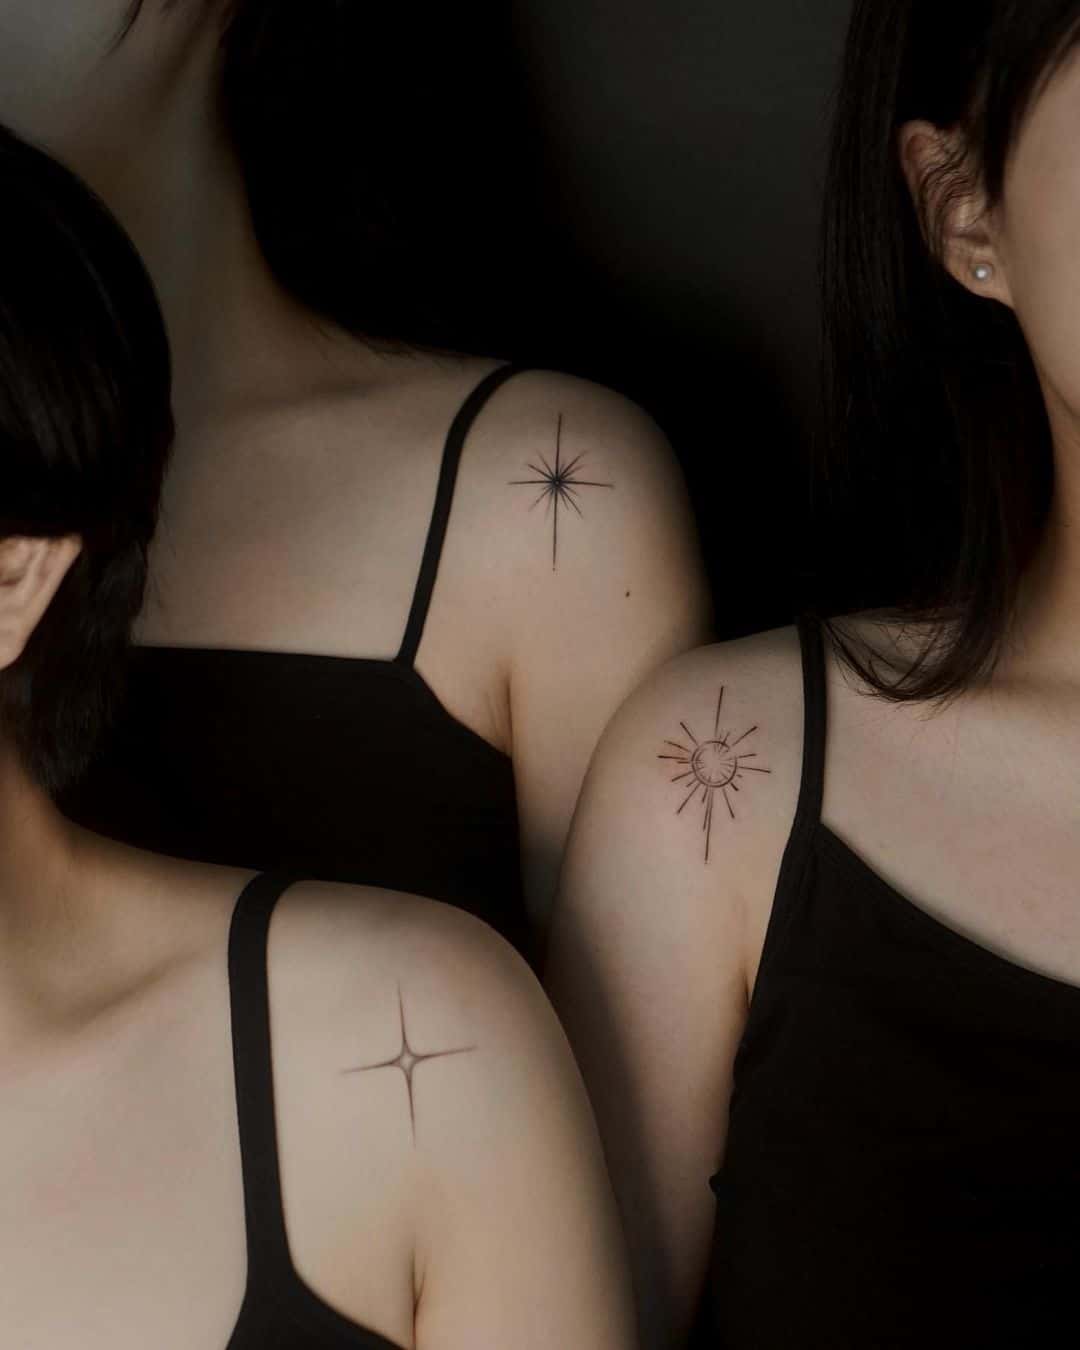 Wonderful matching star tattoo by senseforce.flu